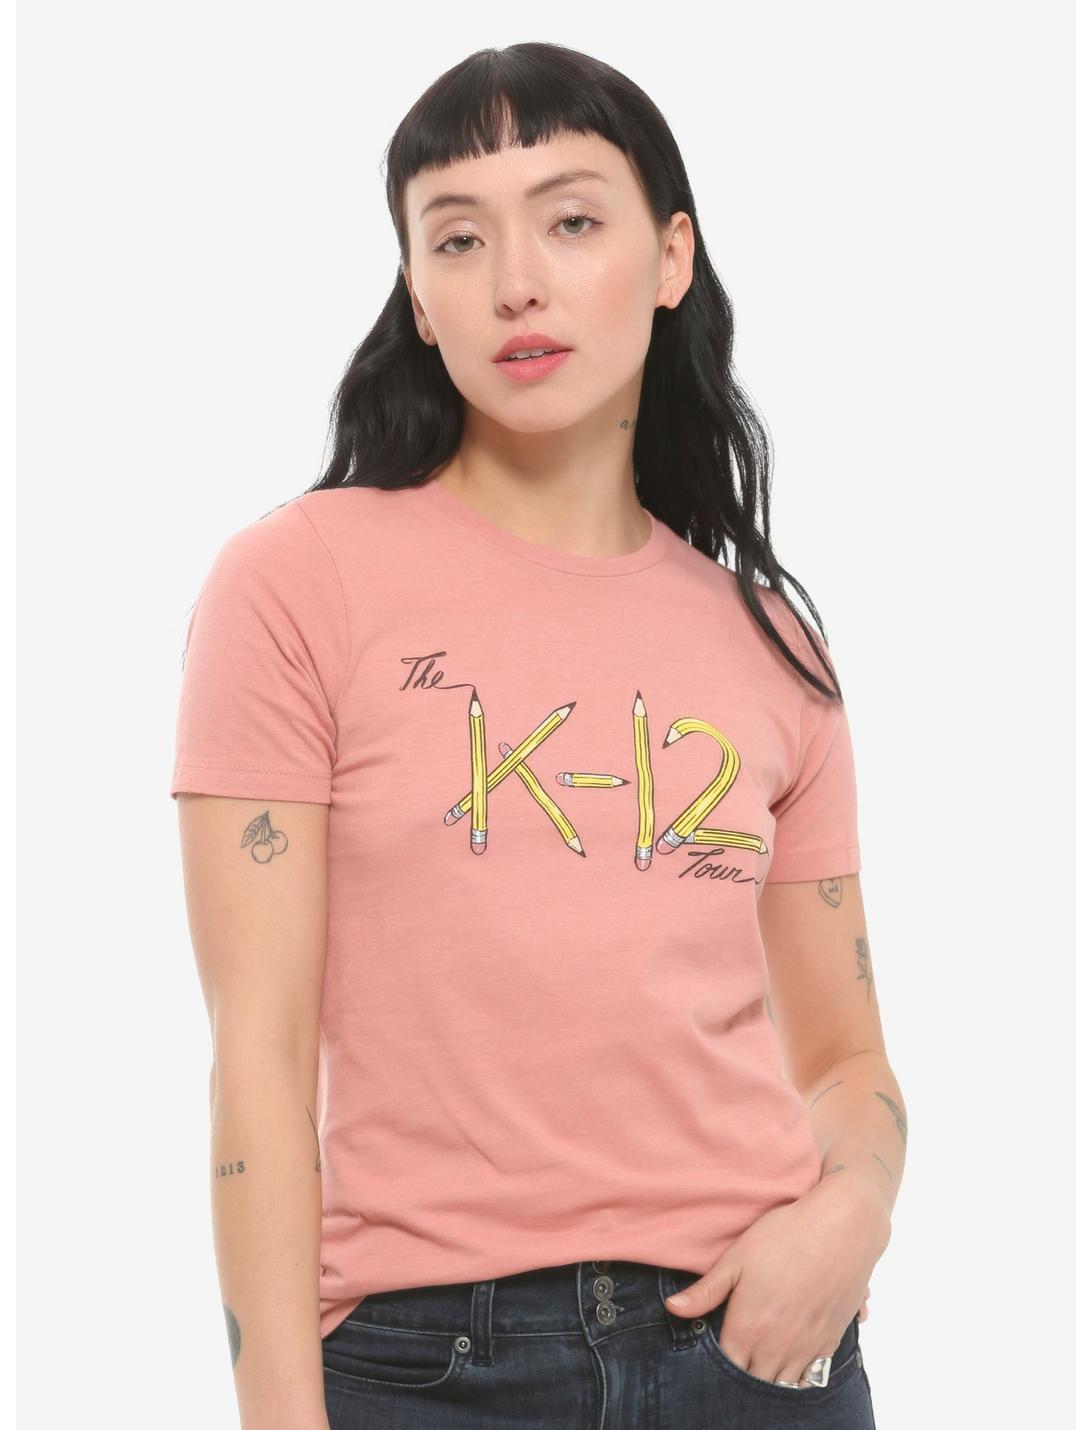 Melanie Martinez K-12 Tour Pencils Girls T-Shirt, PINK, hi-res